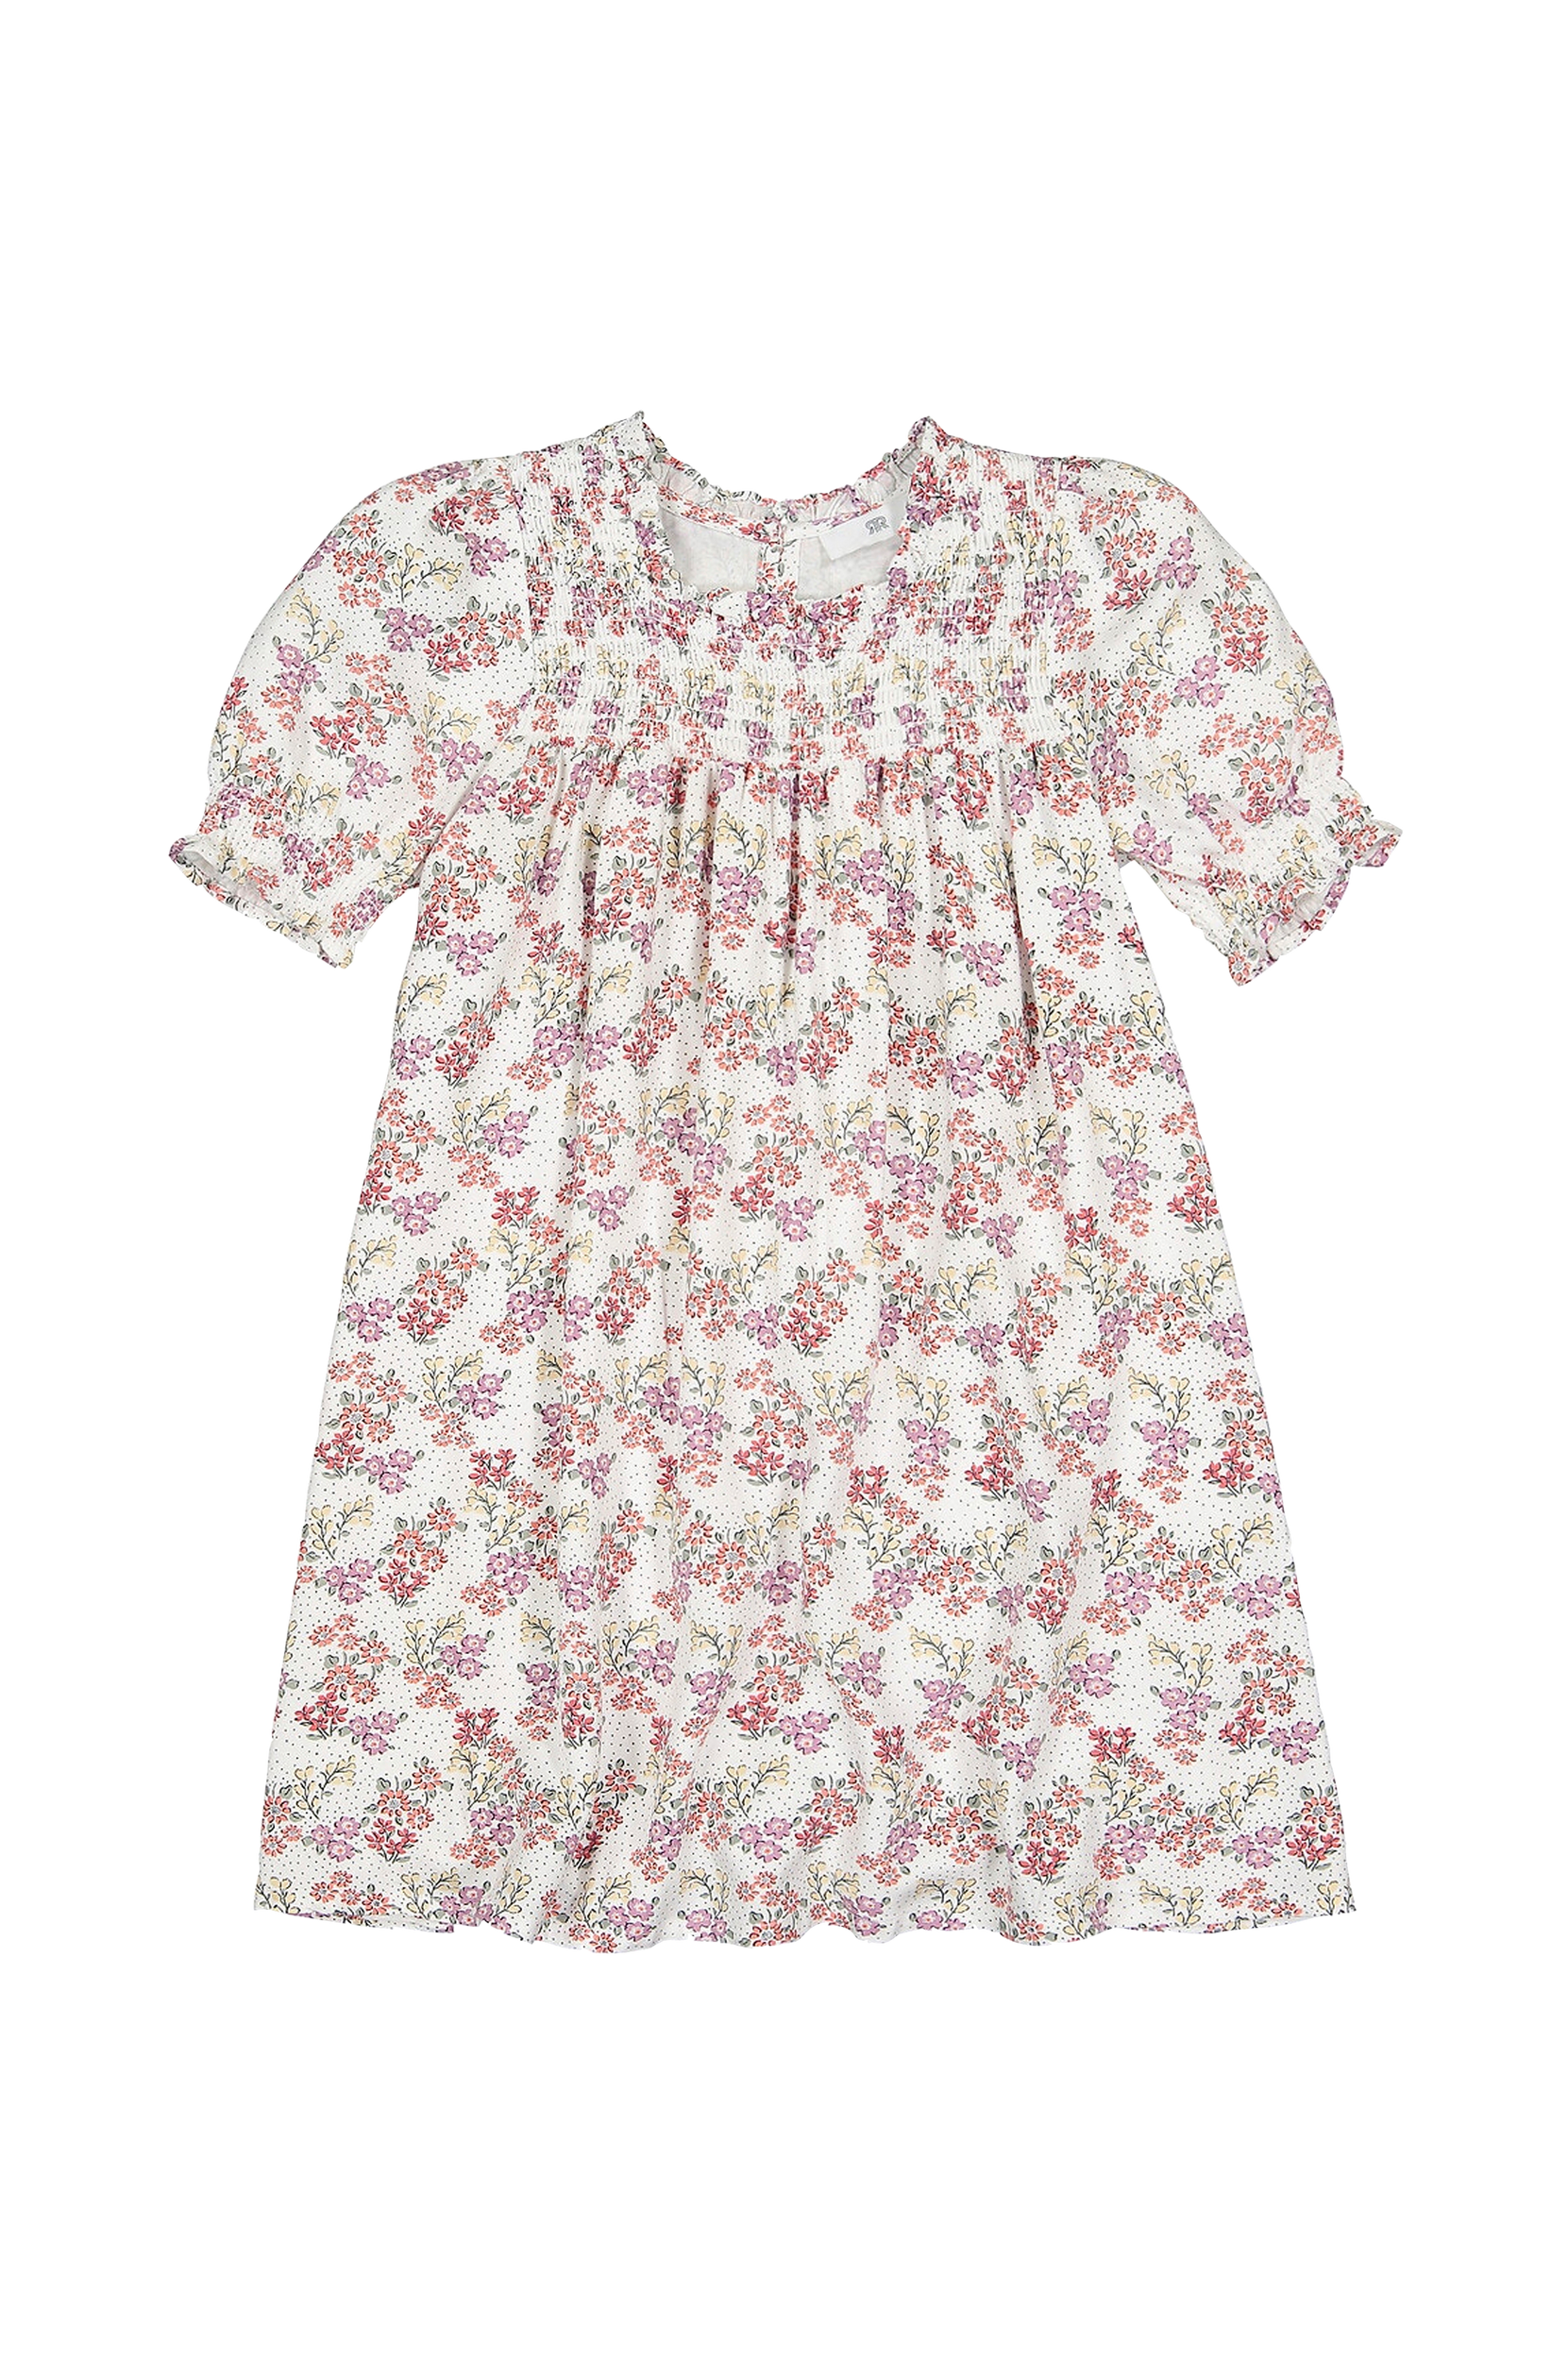 La Redoute - Blomstret kjole med kort ærme - Brun - 134/140